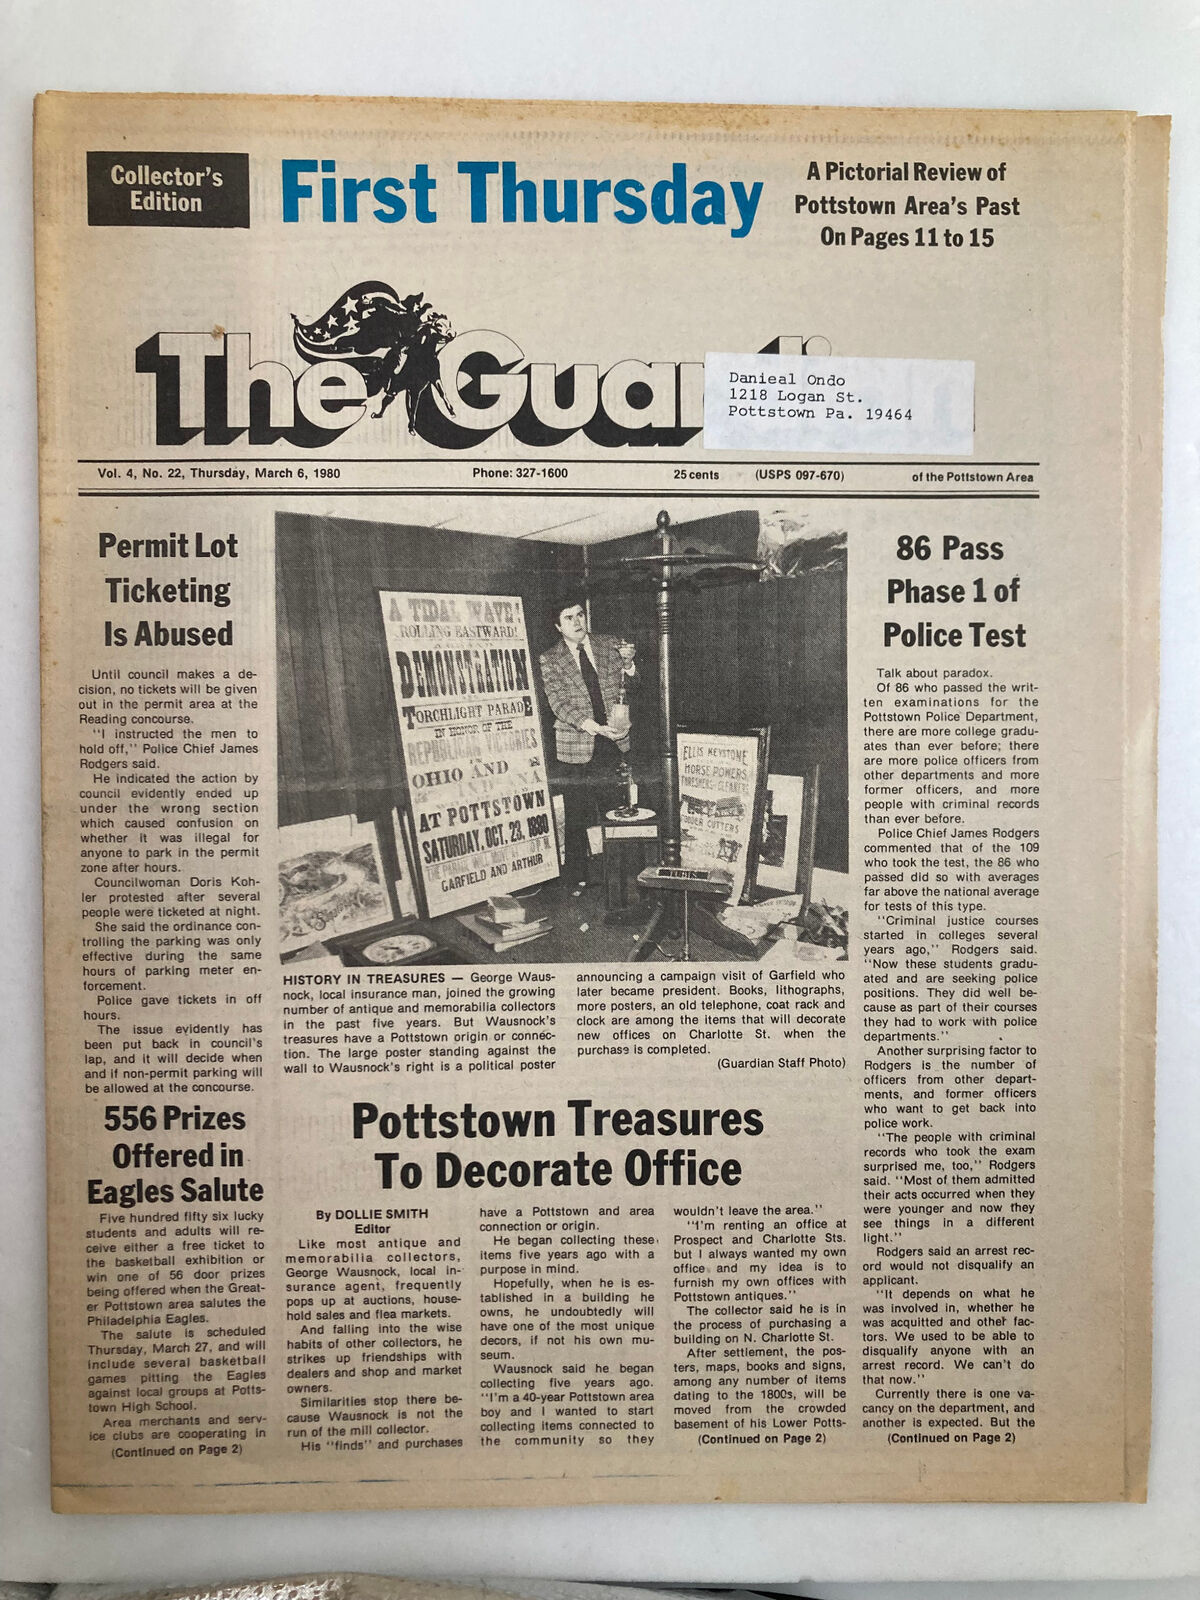 The Guardian Newspaper March 6 1980 Vol 4 #22 Pottstown Treasures Decor Office